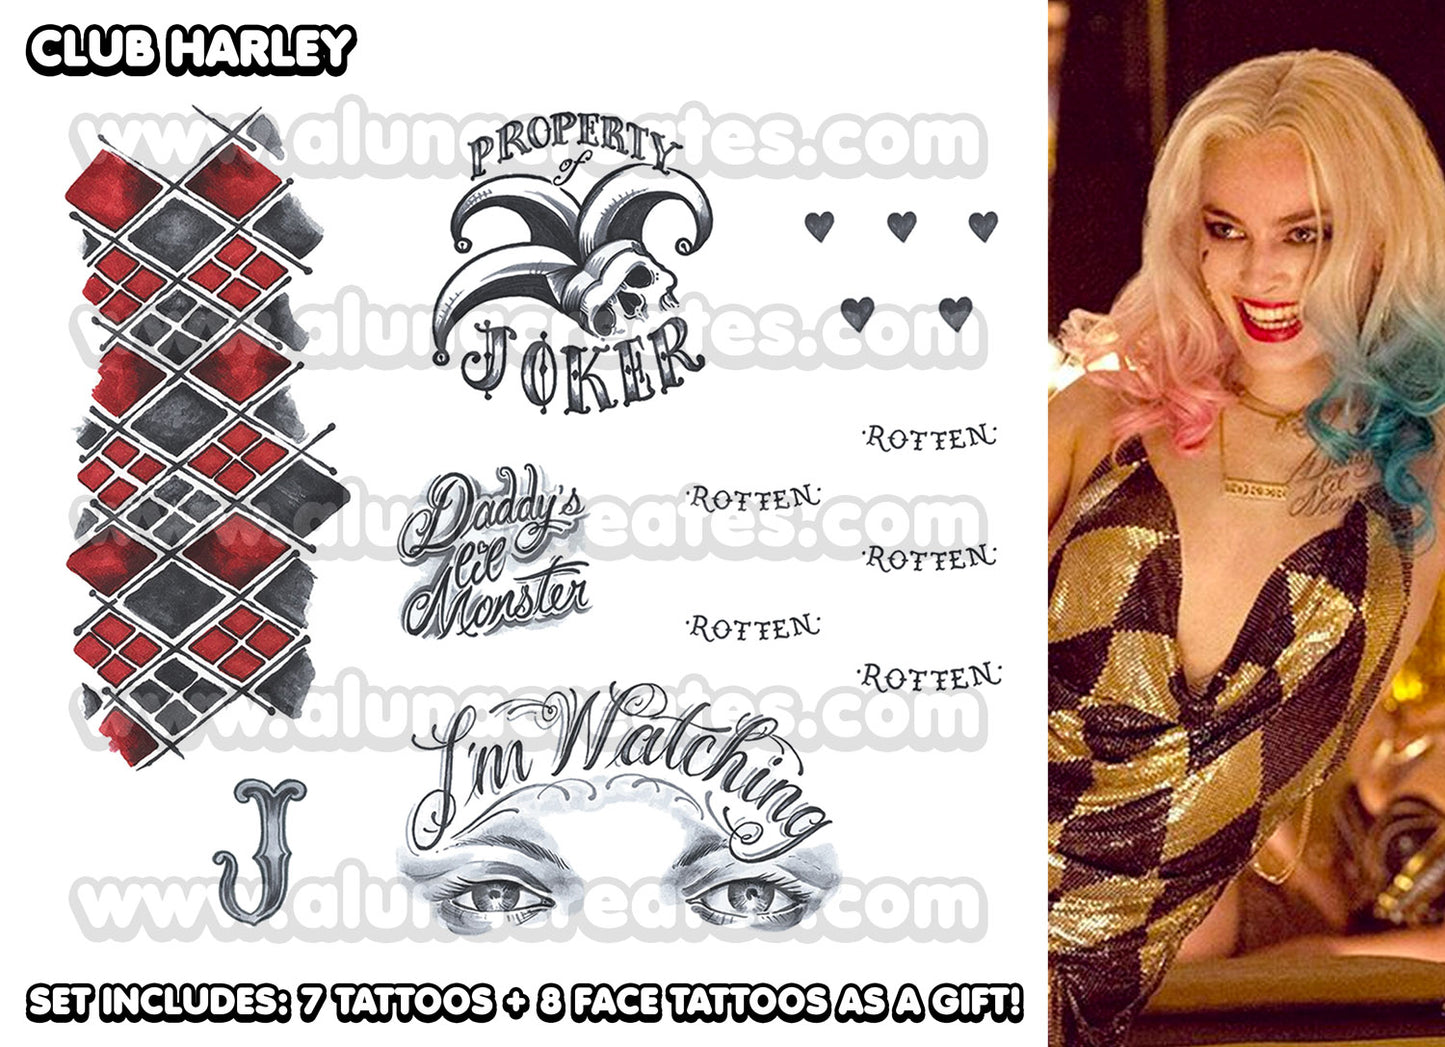 Harley Quinn (Club) - Suicide Squad | Temporary Tattoos | FULL SET - AlunaCreates